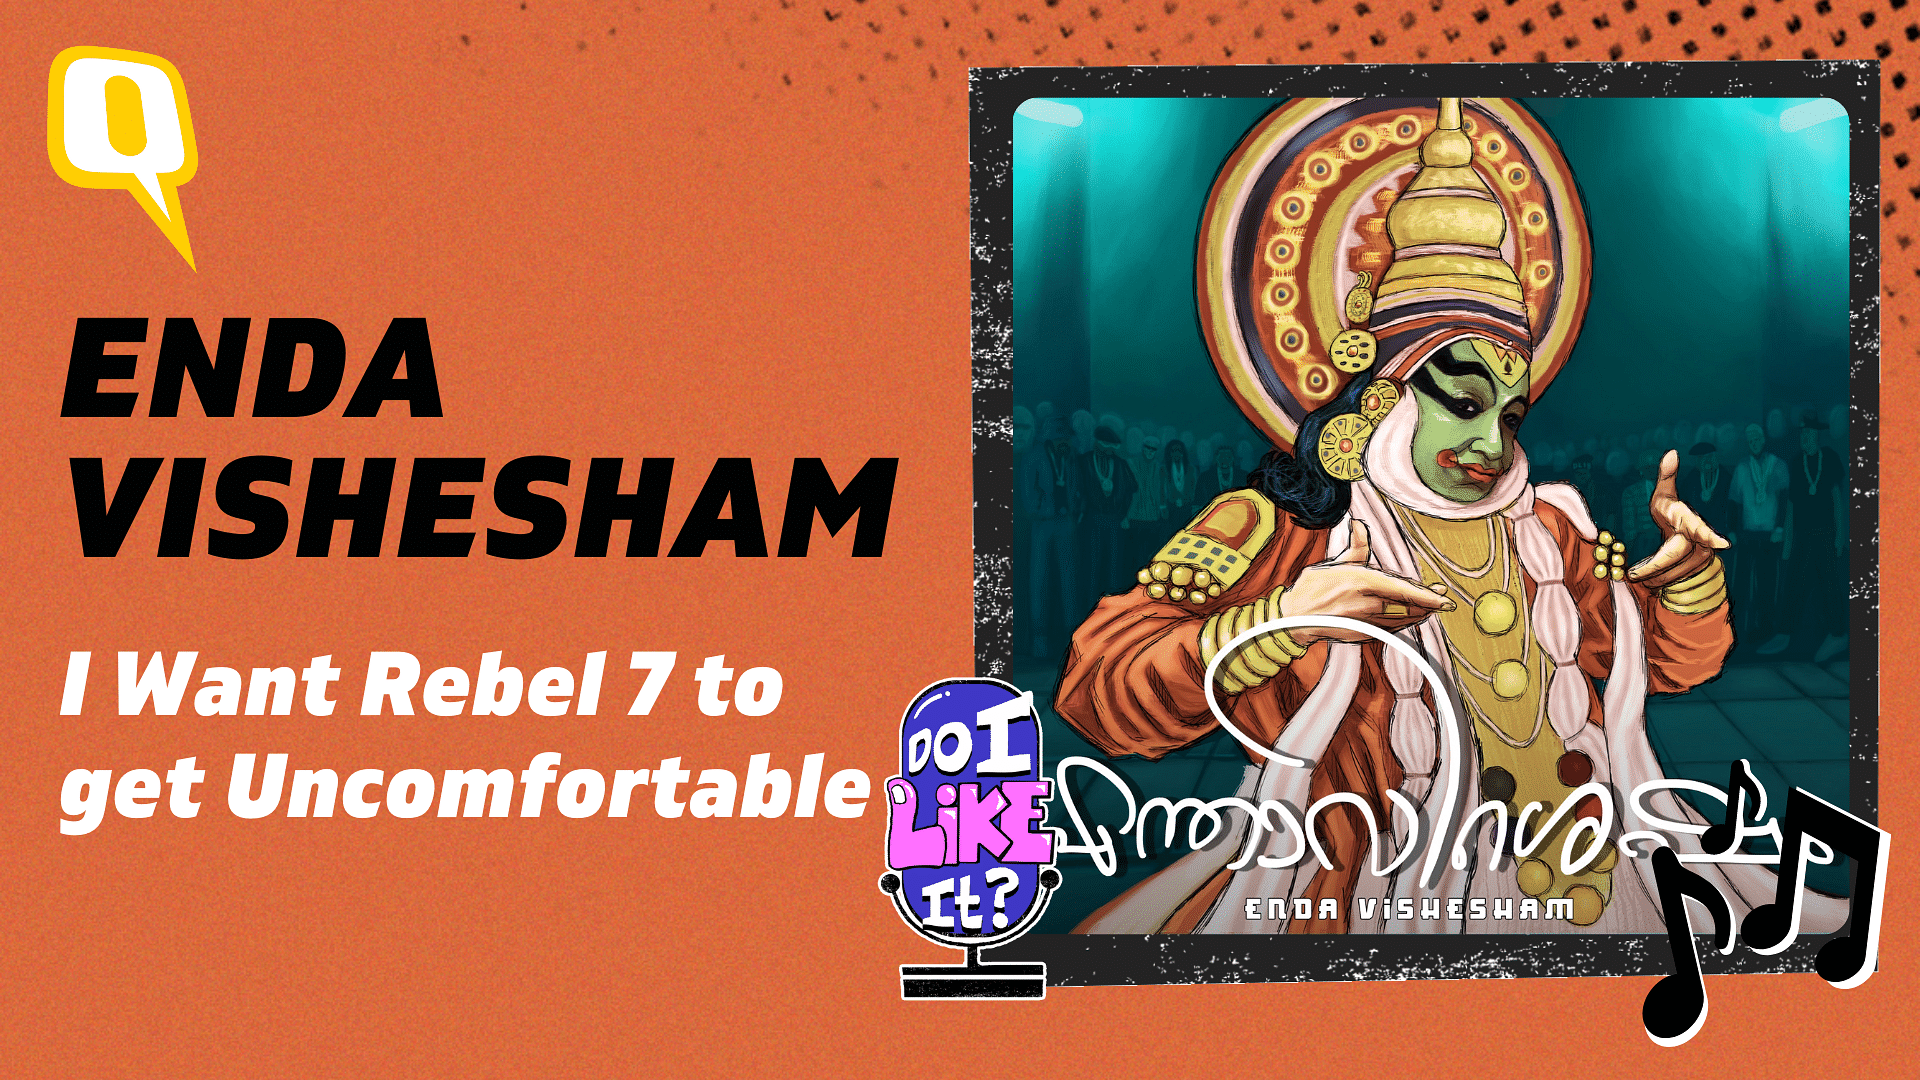 <div class="paragraphs"><p>In this episode of Do I Like It, Prateek reviews the album EndaVishesham by Rebel 7</p></div>